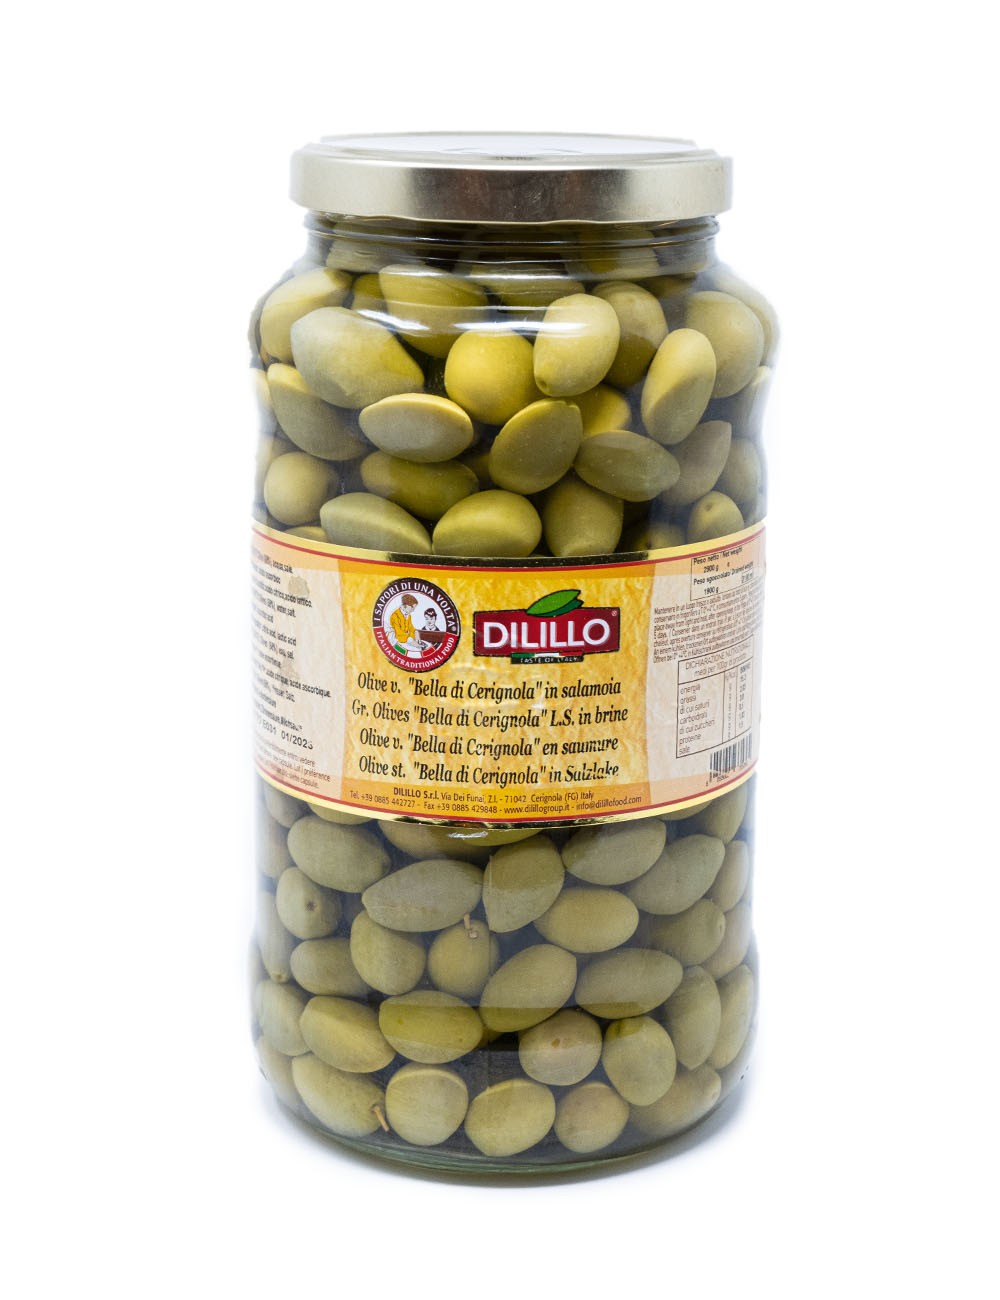 Grüne Oliven Dilillo-Salzlake g 2900 Cerignola Bella in di